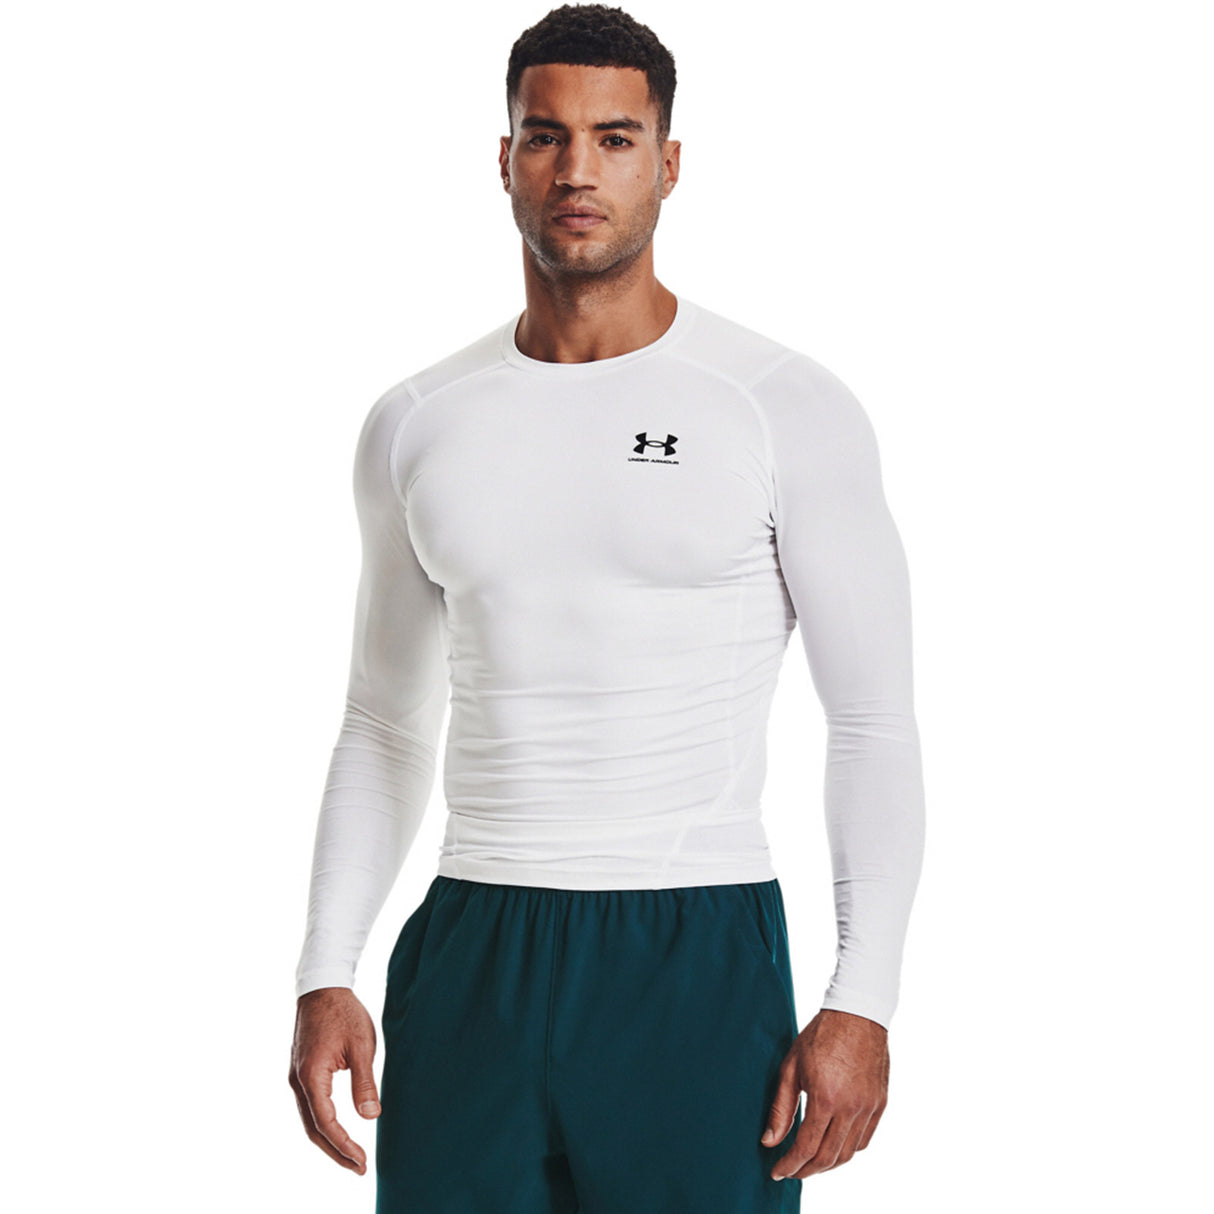 Under Armour Men's HeatGear Compression Long Sleeve T-Shirt